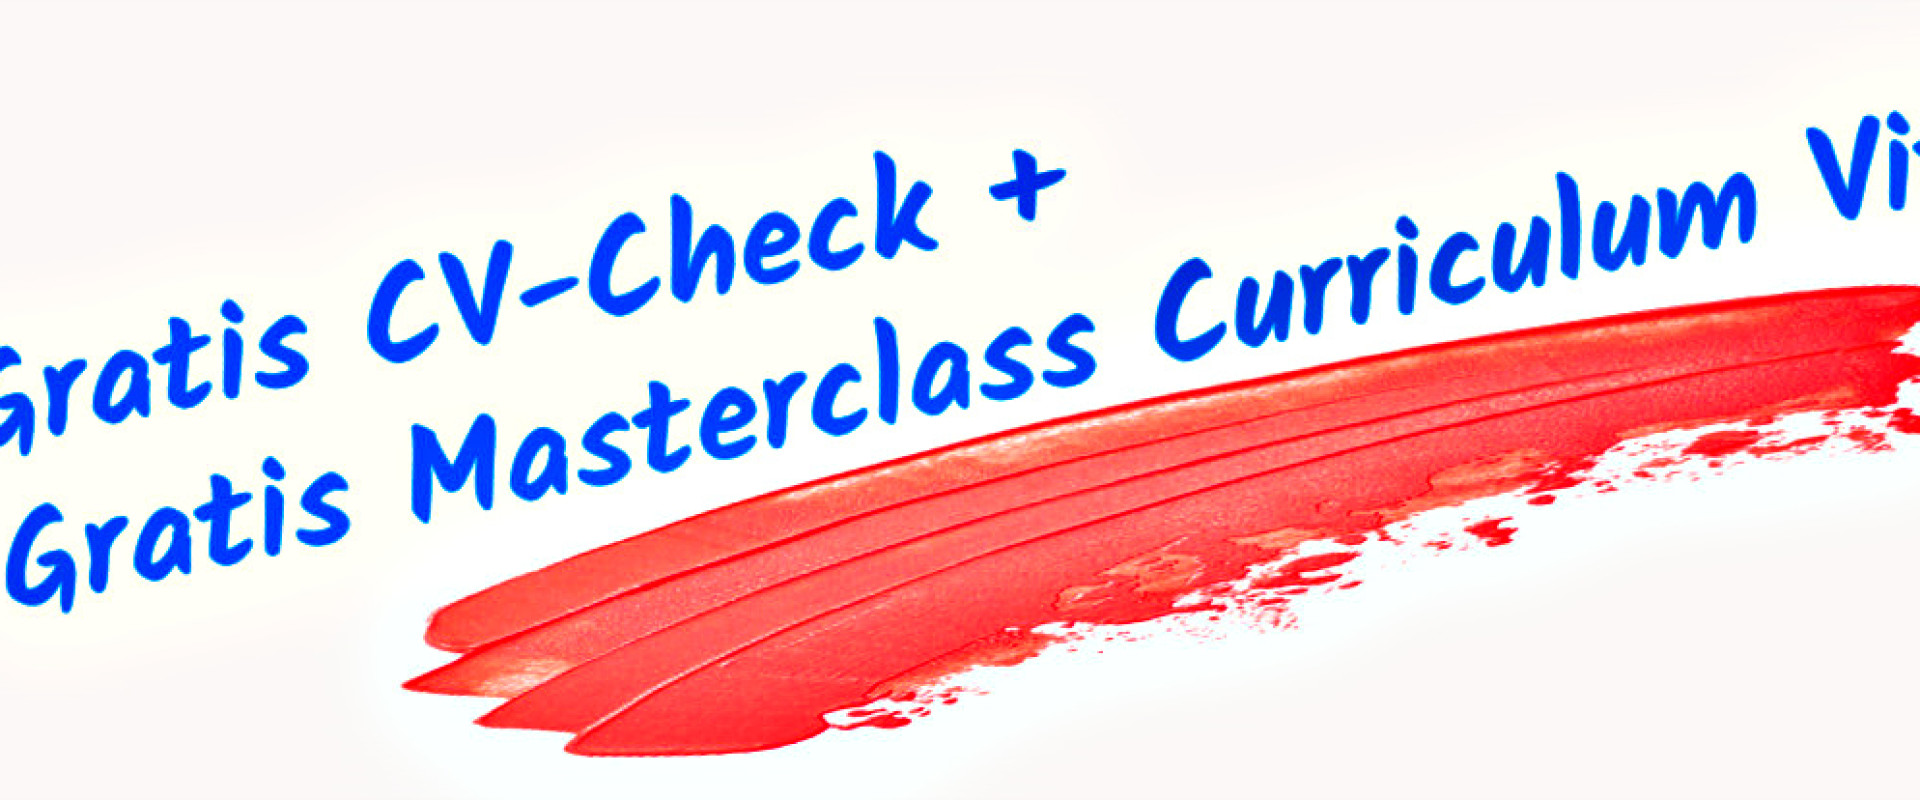 Gratis CV-Check + Gratis Masterclass Curriculum Vitae